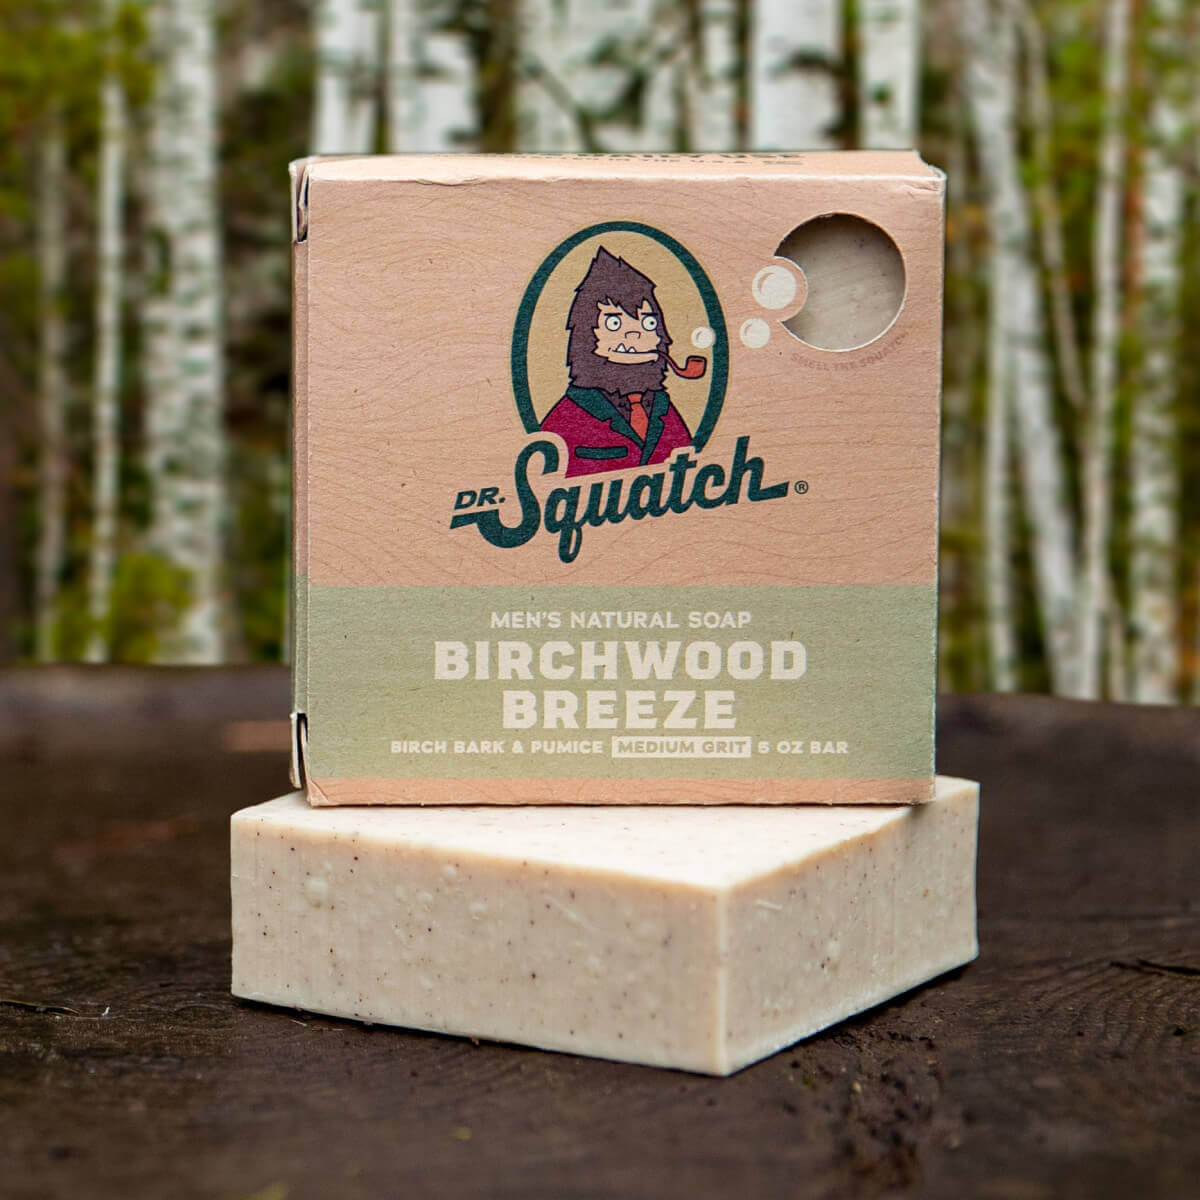 Dr. Squatch Men's Natural Soap Birchwood Breeze 5oz Bar